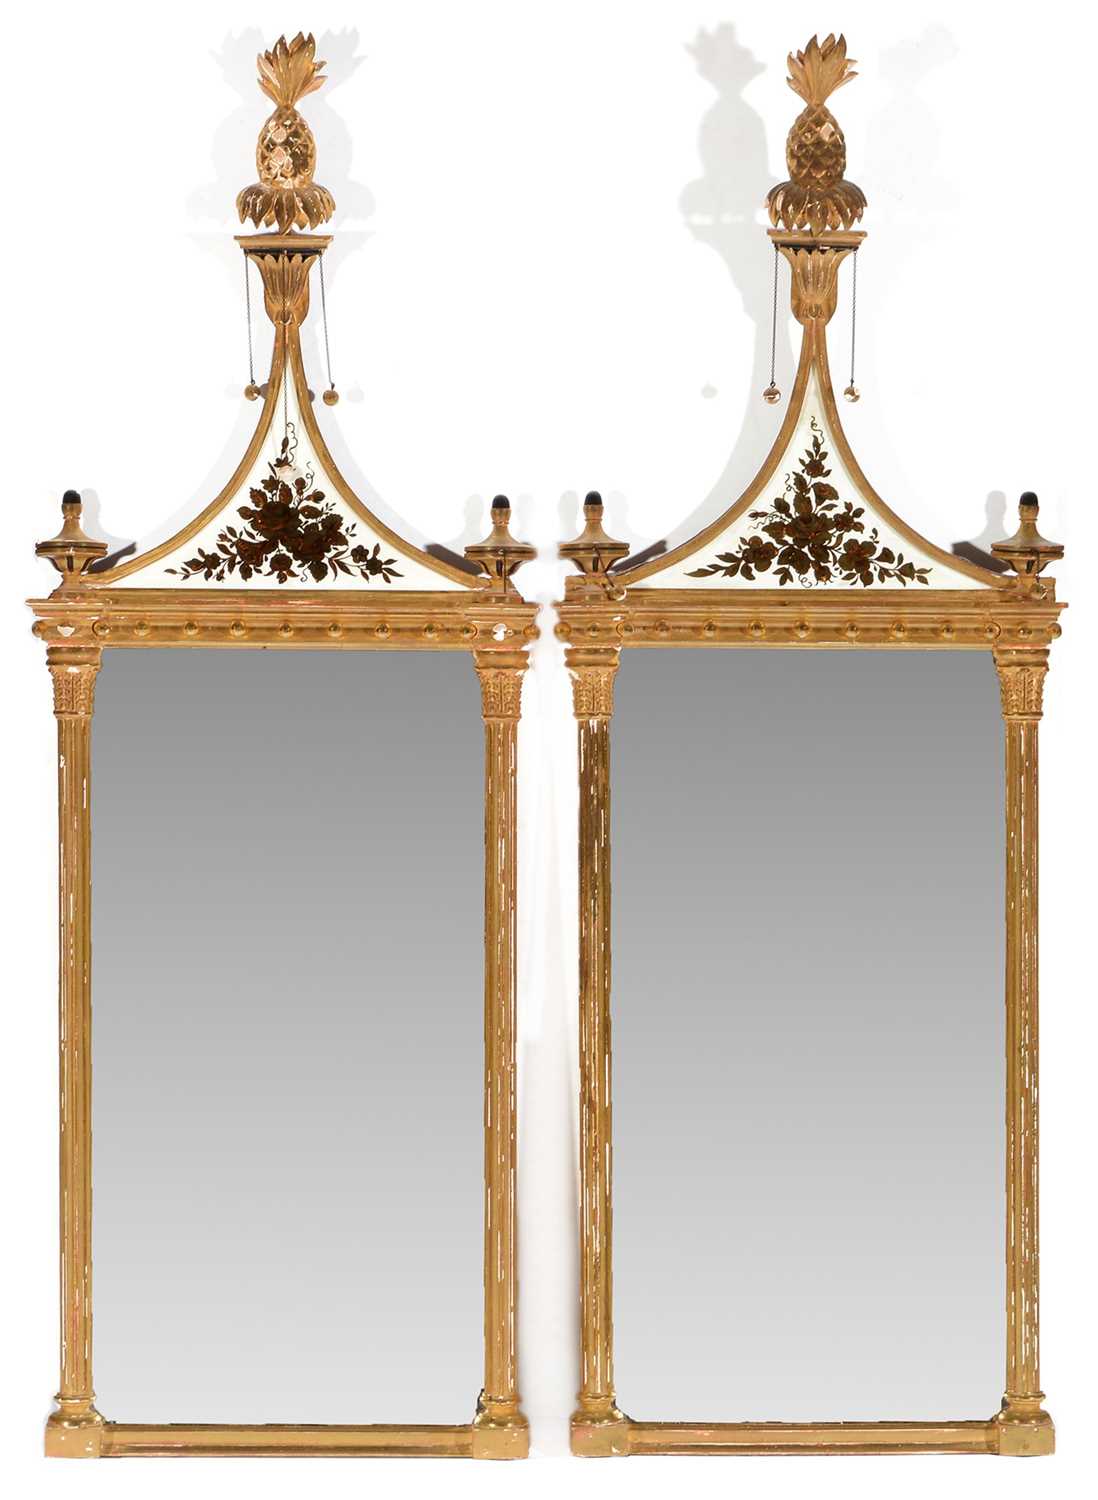 Lot 751 - A pair of modern reproduction gilt-framed pier glasses